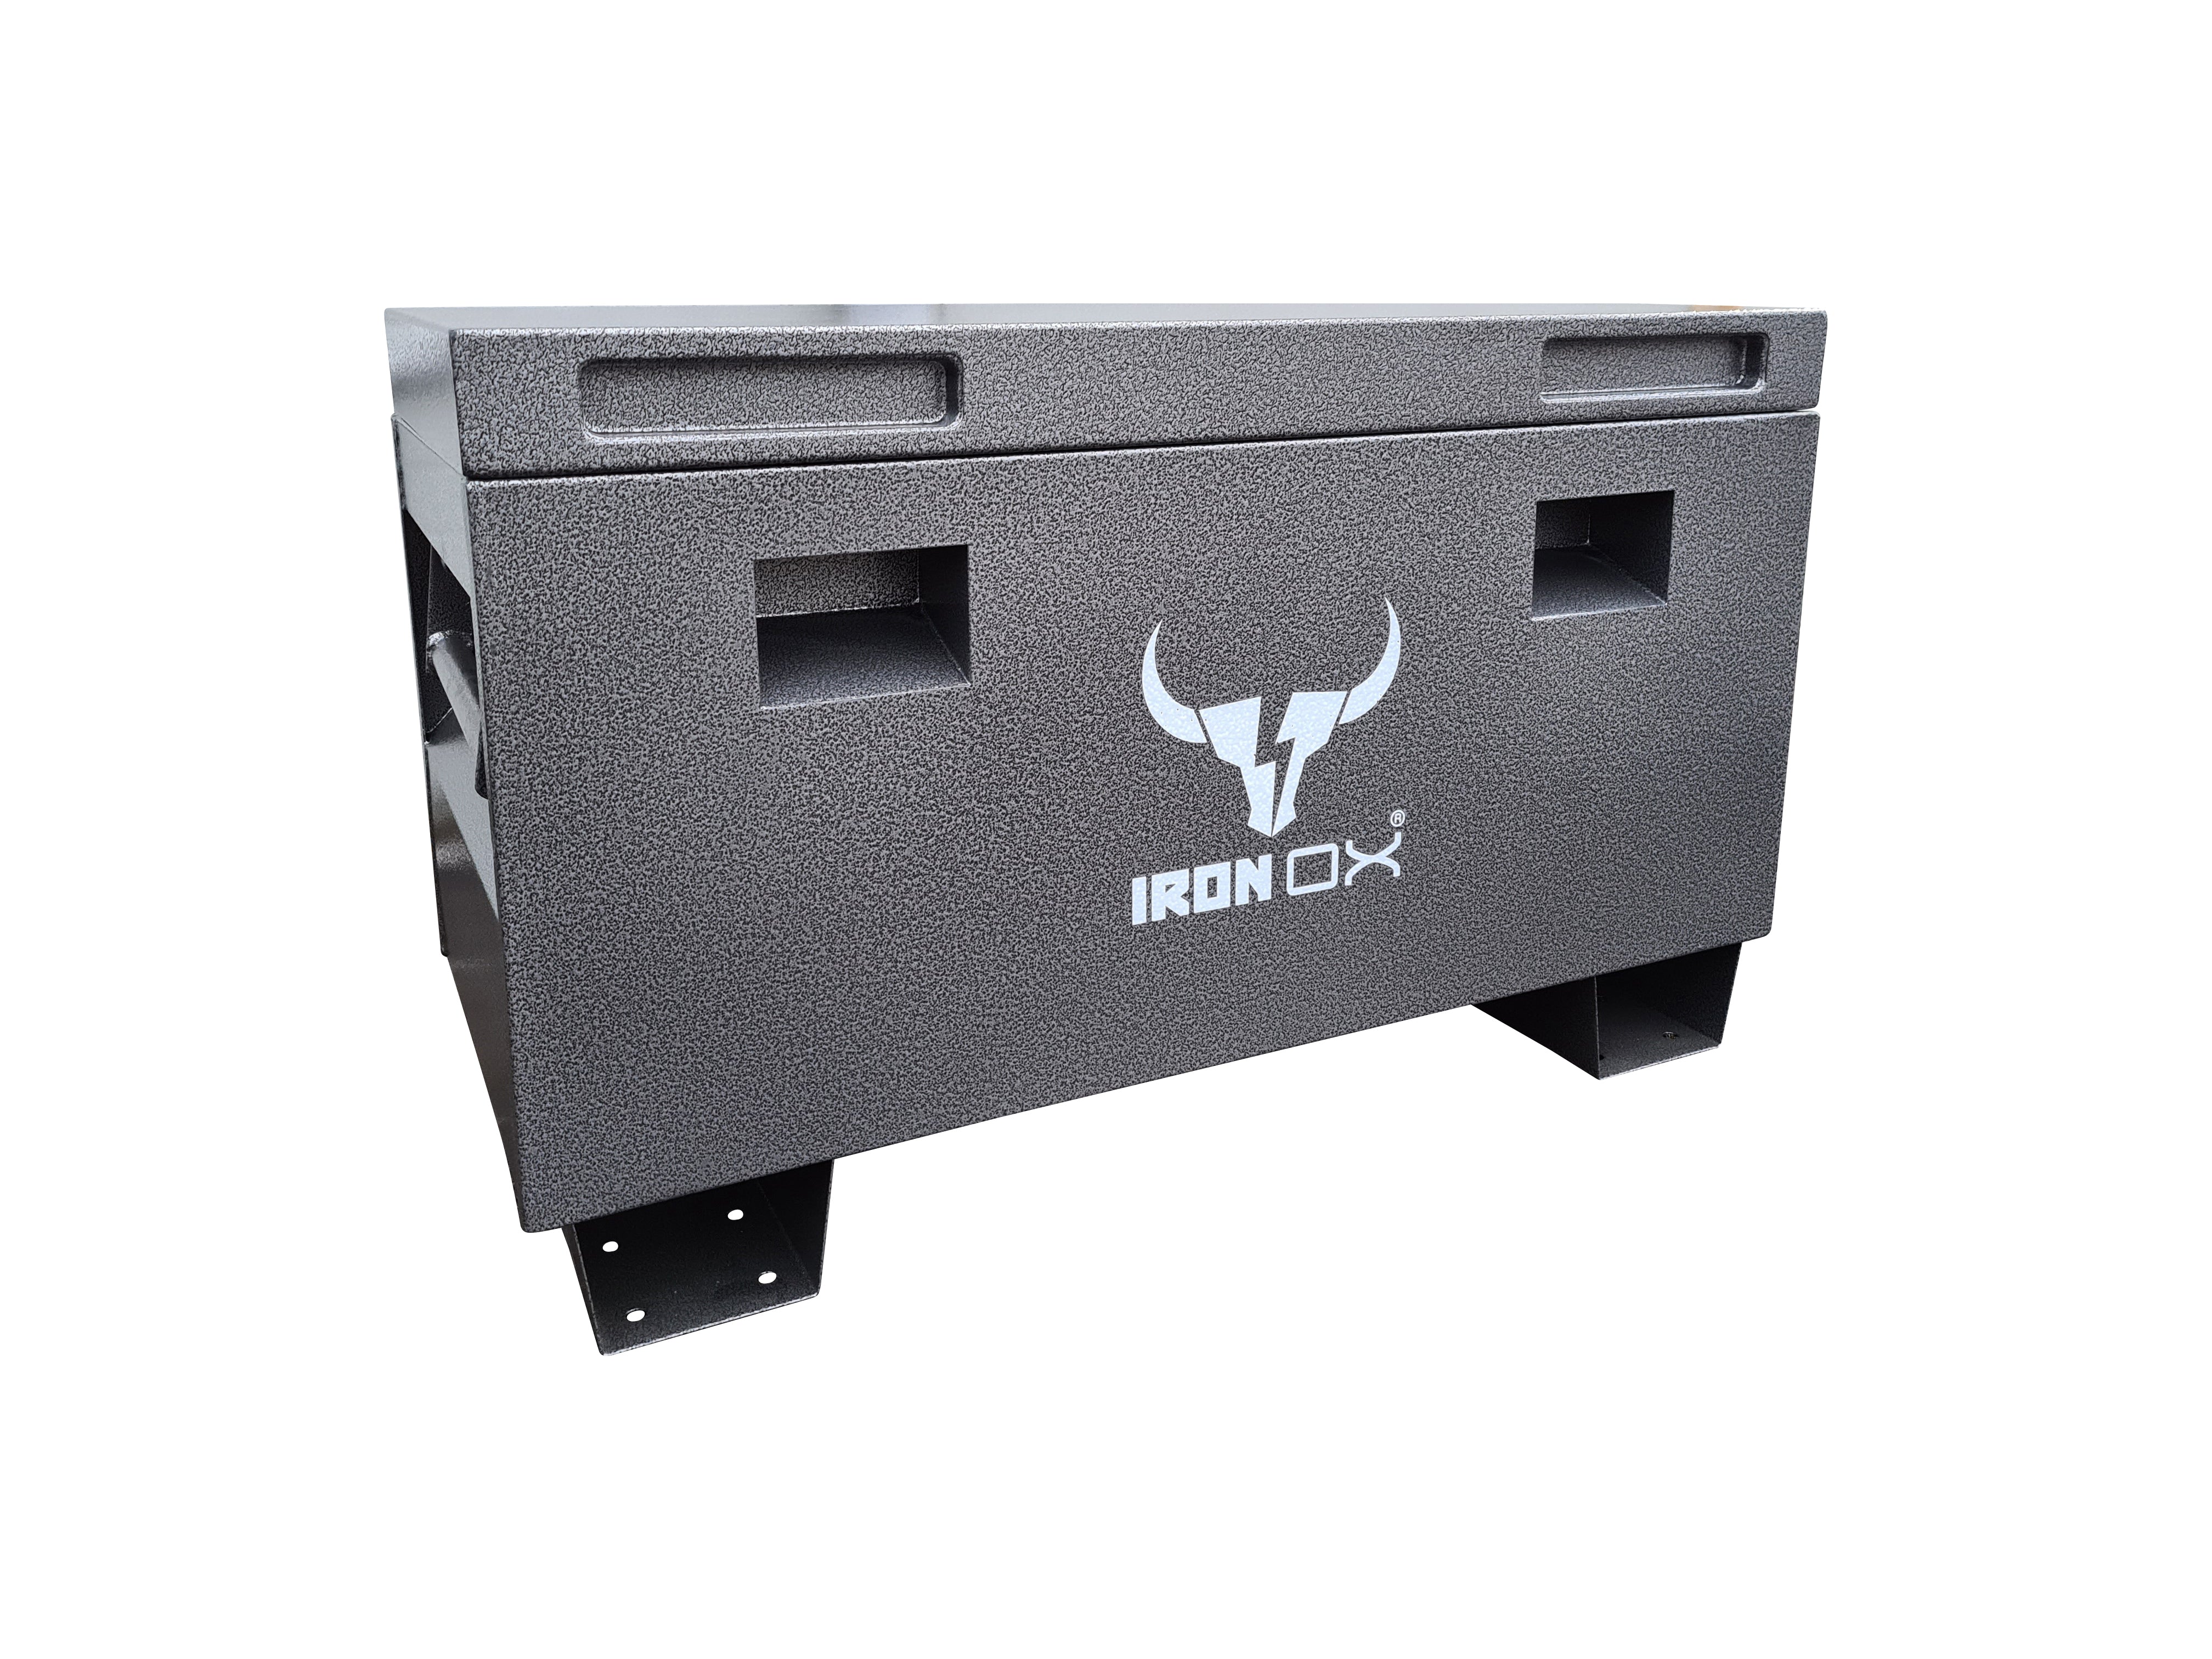 Steel Job Site Tool box Iron Ox® - 3 Piece Set - Free Discus Locks!